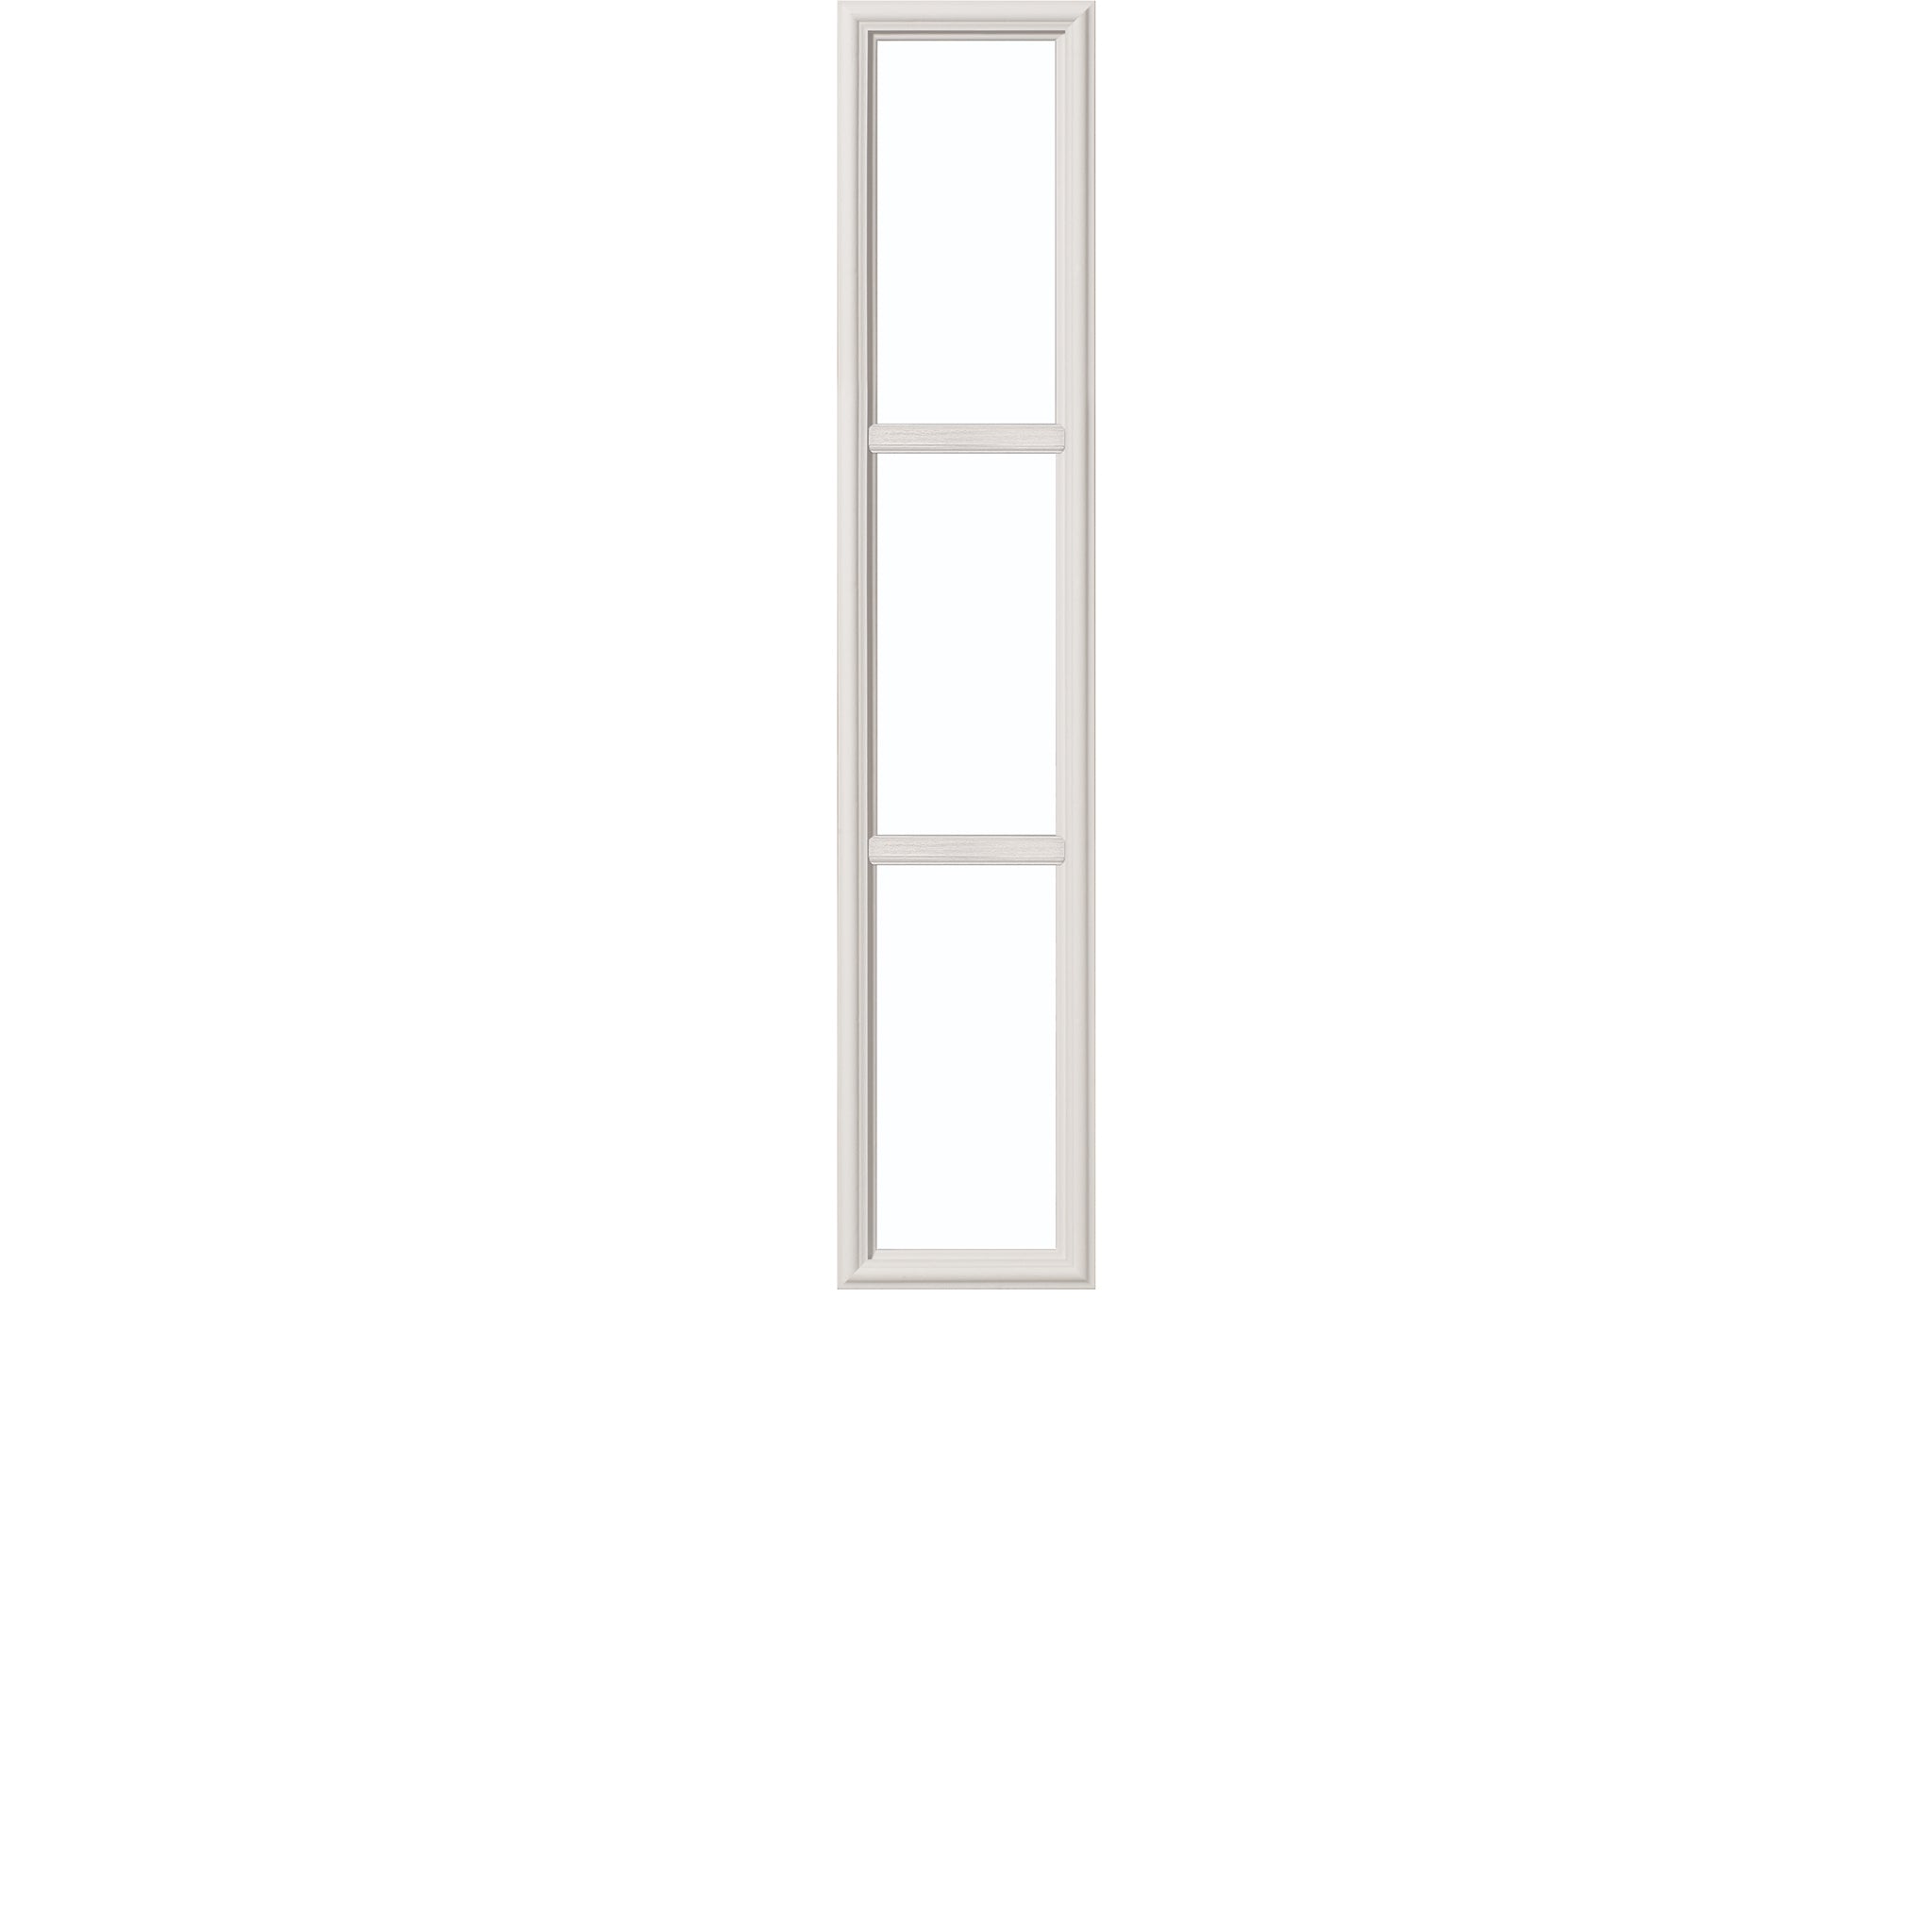 3/4 Sidelite Frame Kit with 3 Grids – Pease Doors: The Door Store